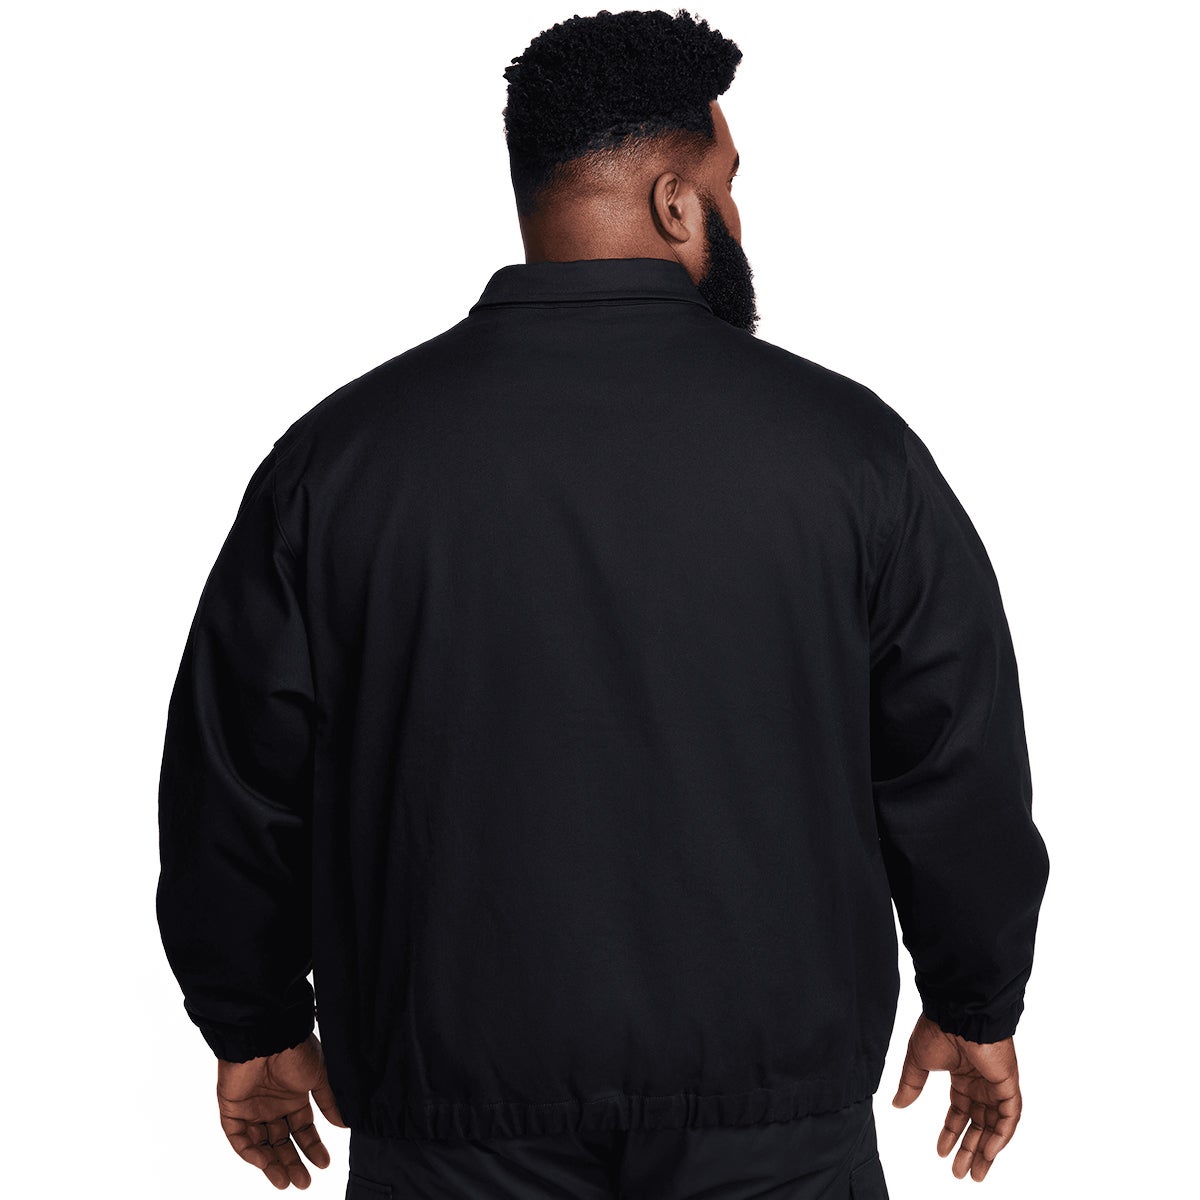 Nike SB Woven Twill Premium Jacket in Black